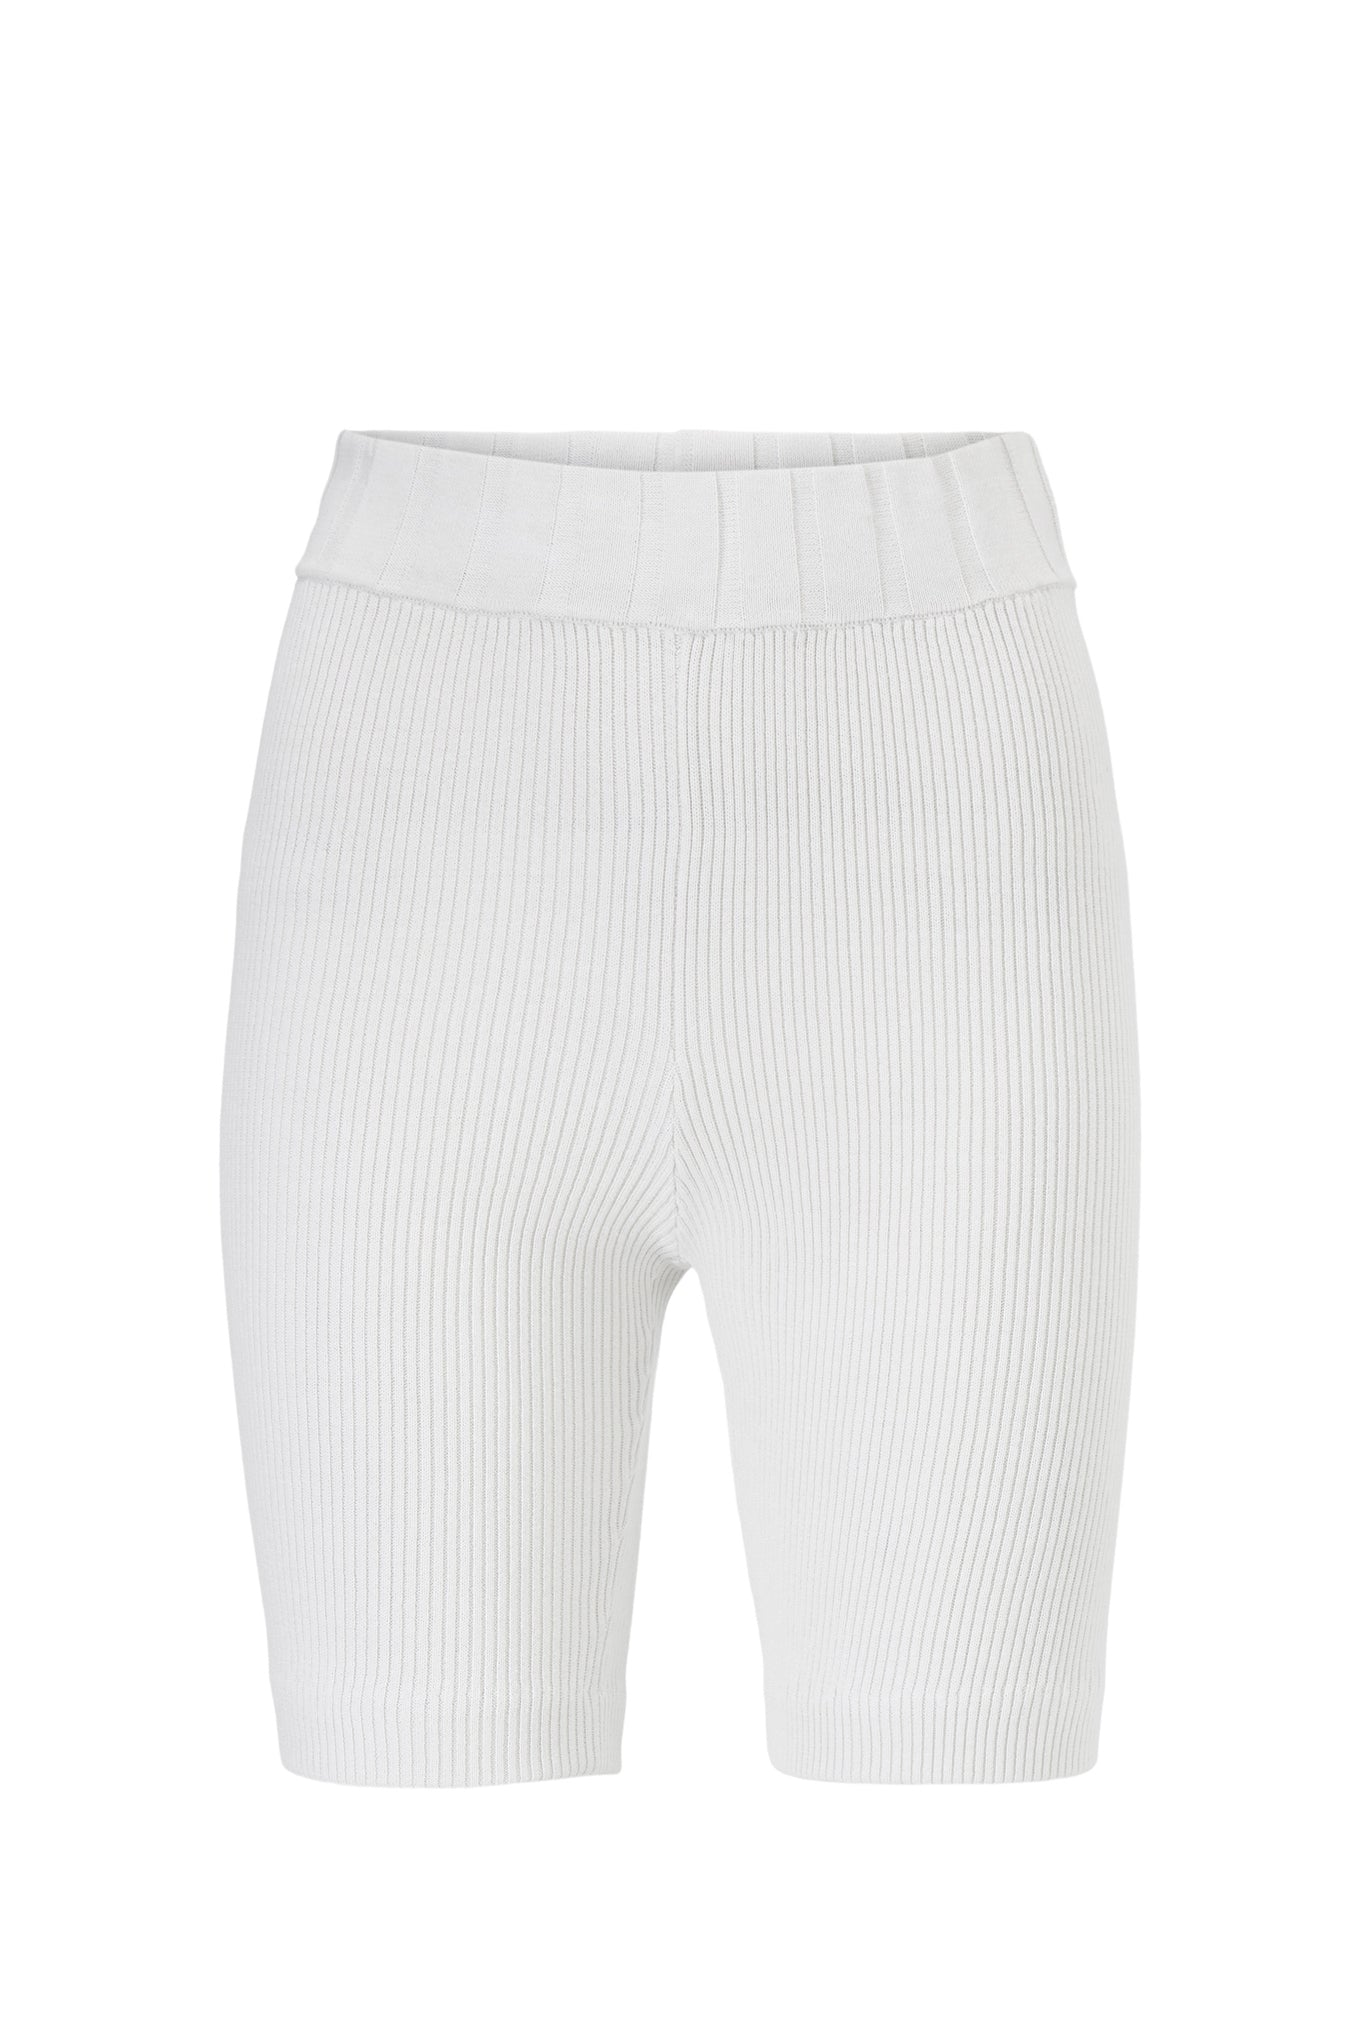 Nixon Knit Shorts - White - Silk/Cotton